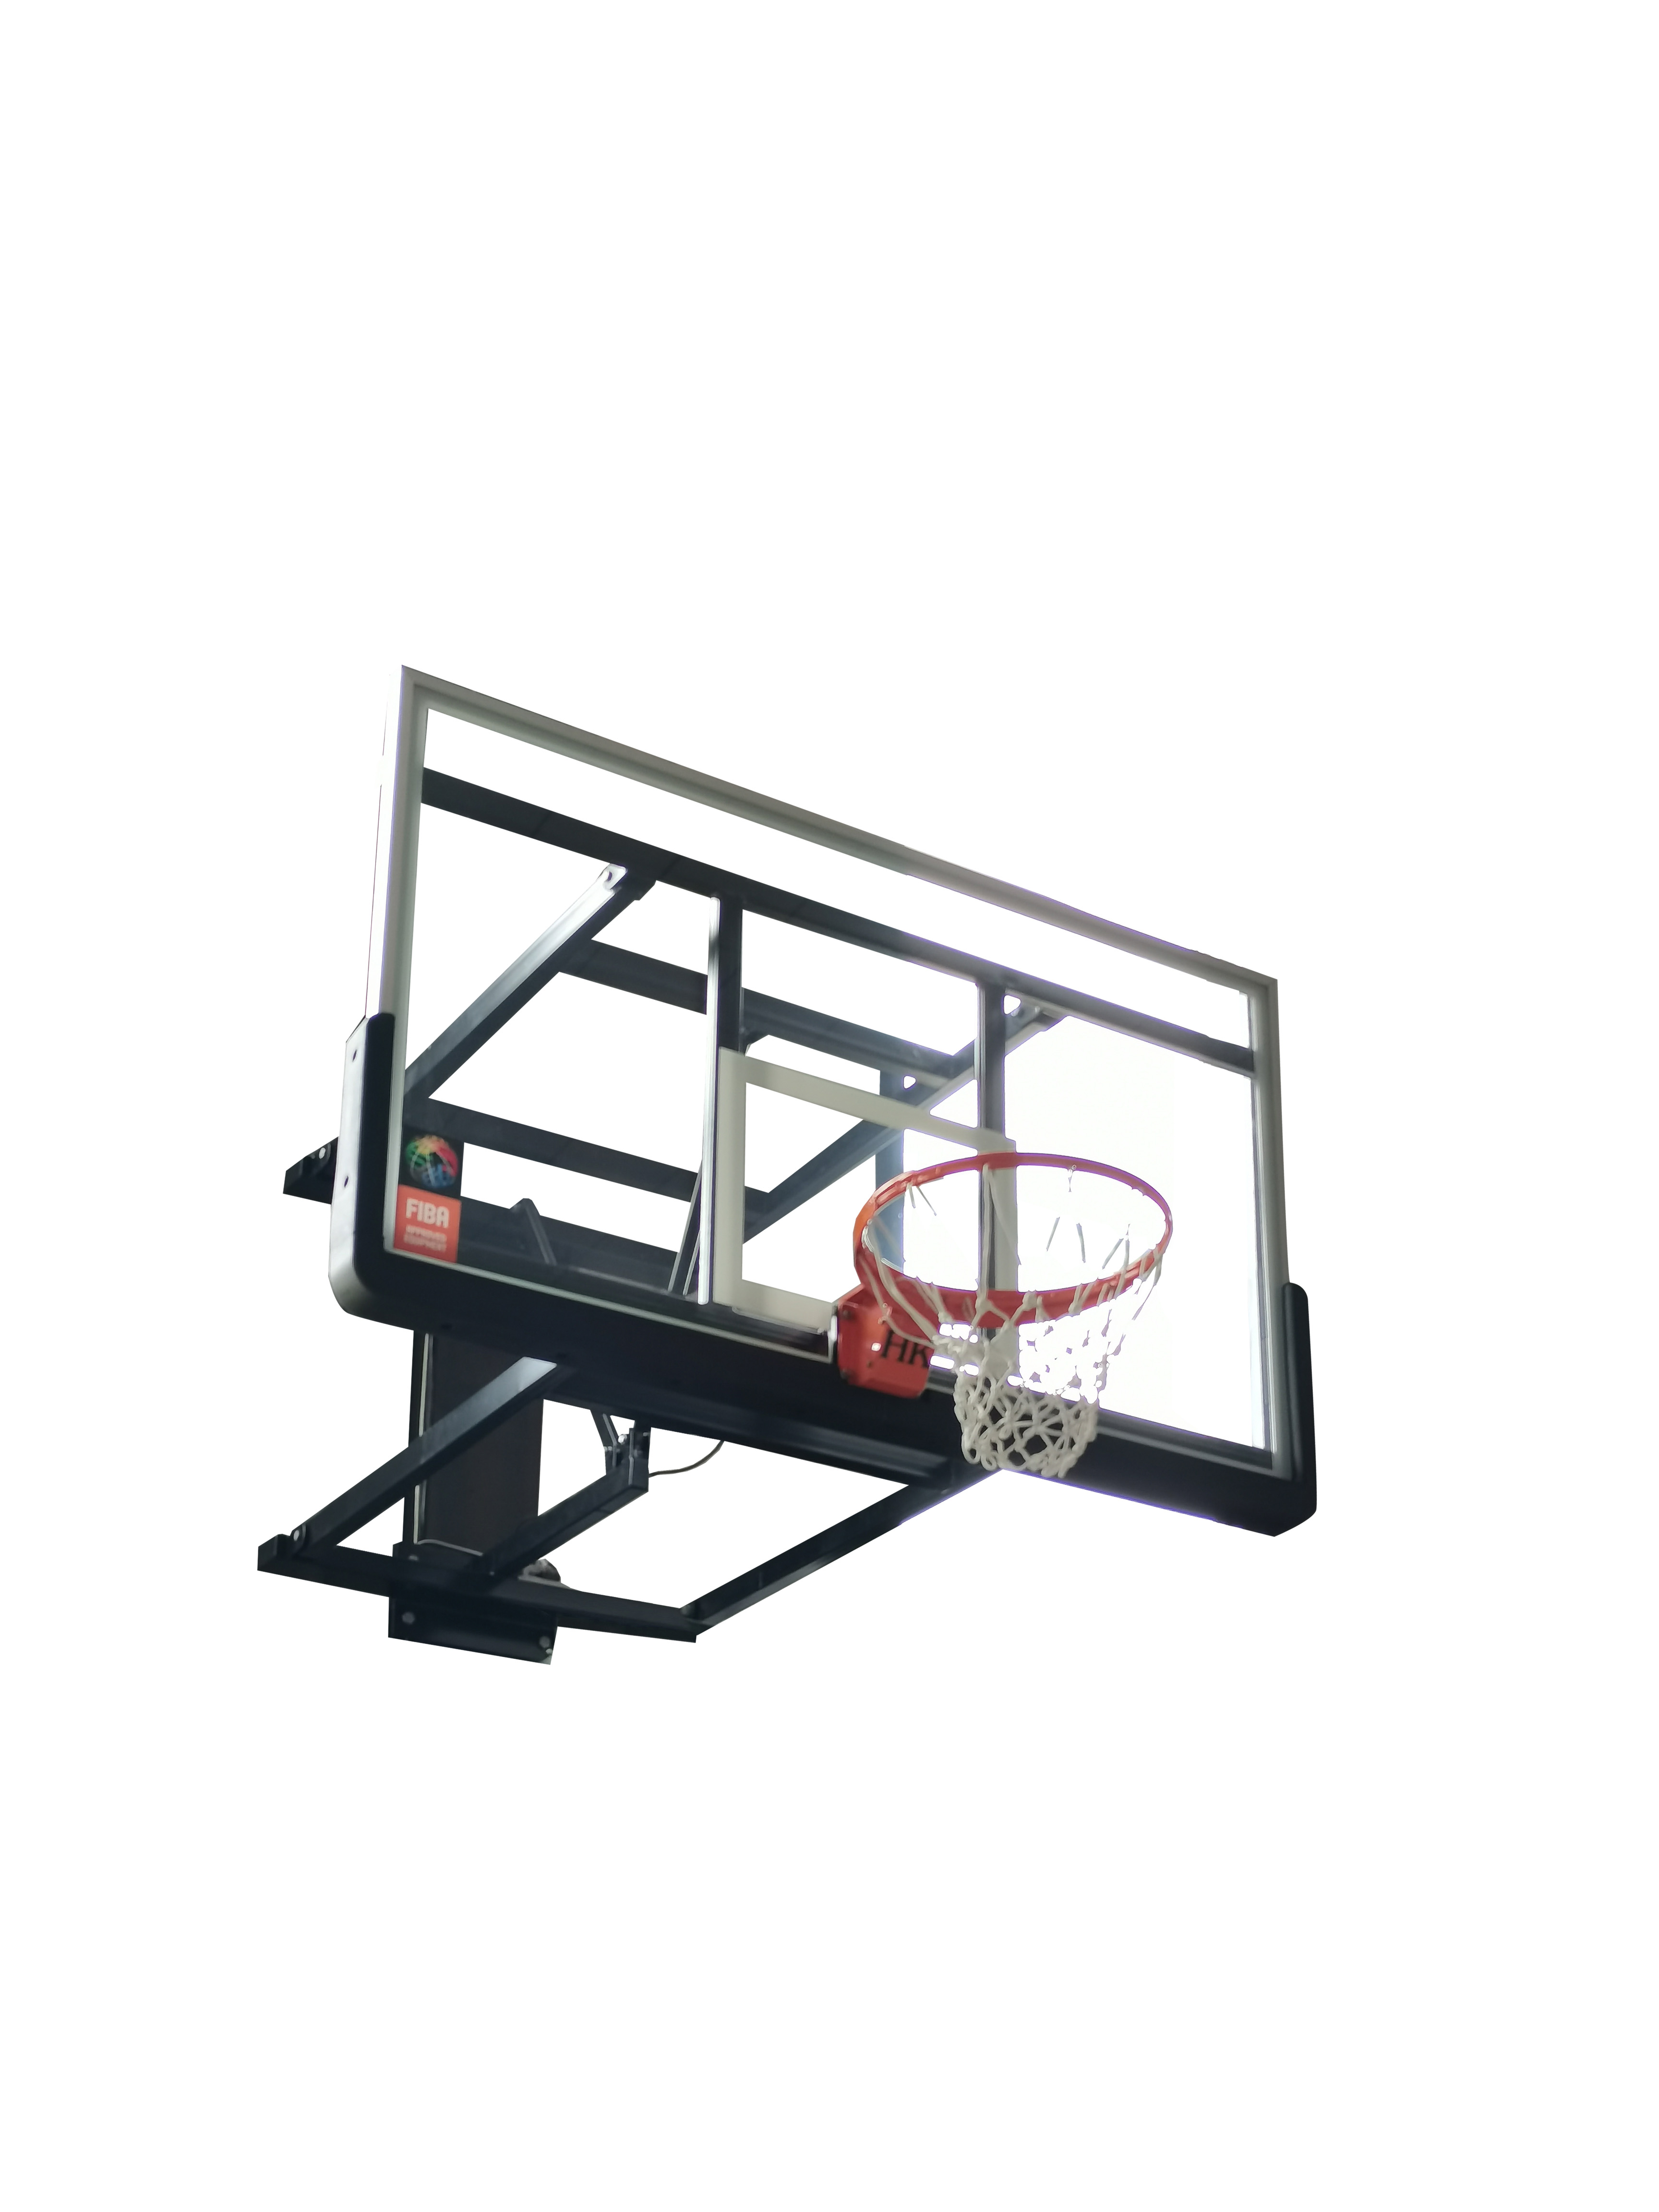 HKXB-1009 墻面電動升降成人籃球架.jpg